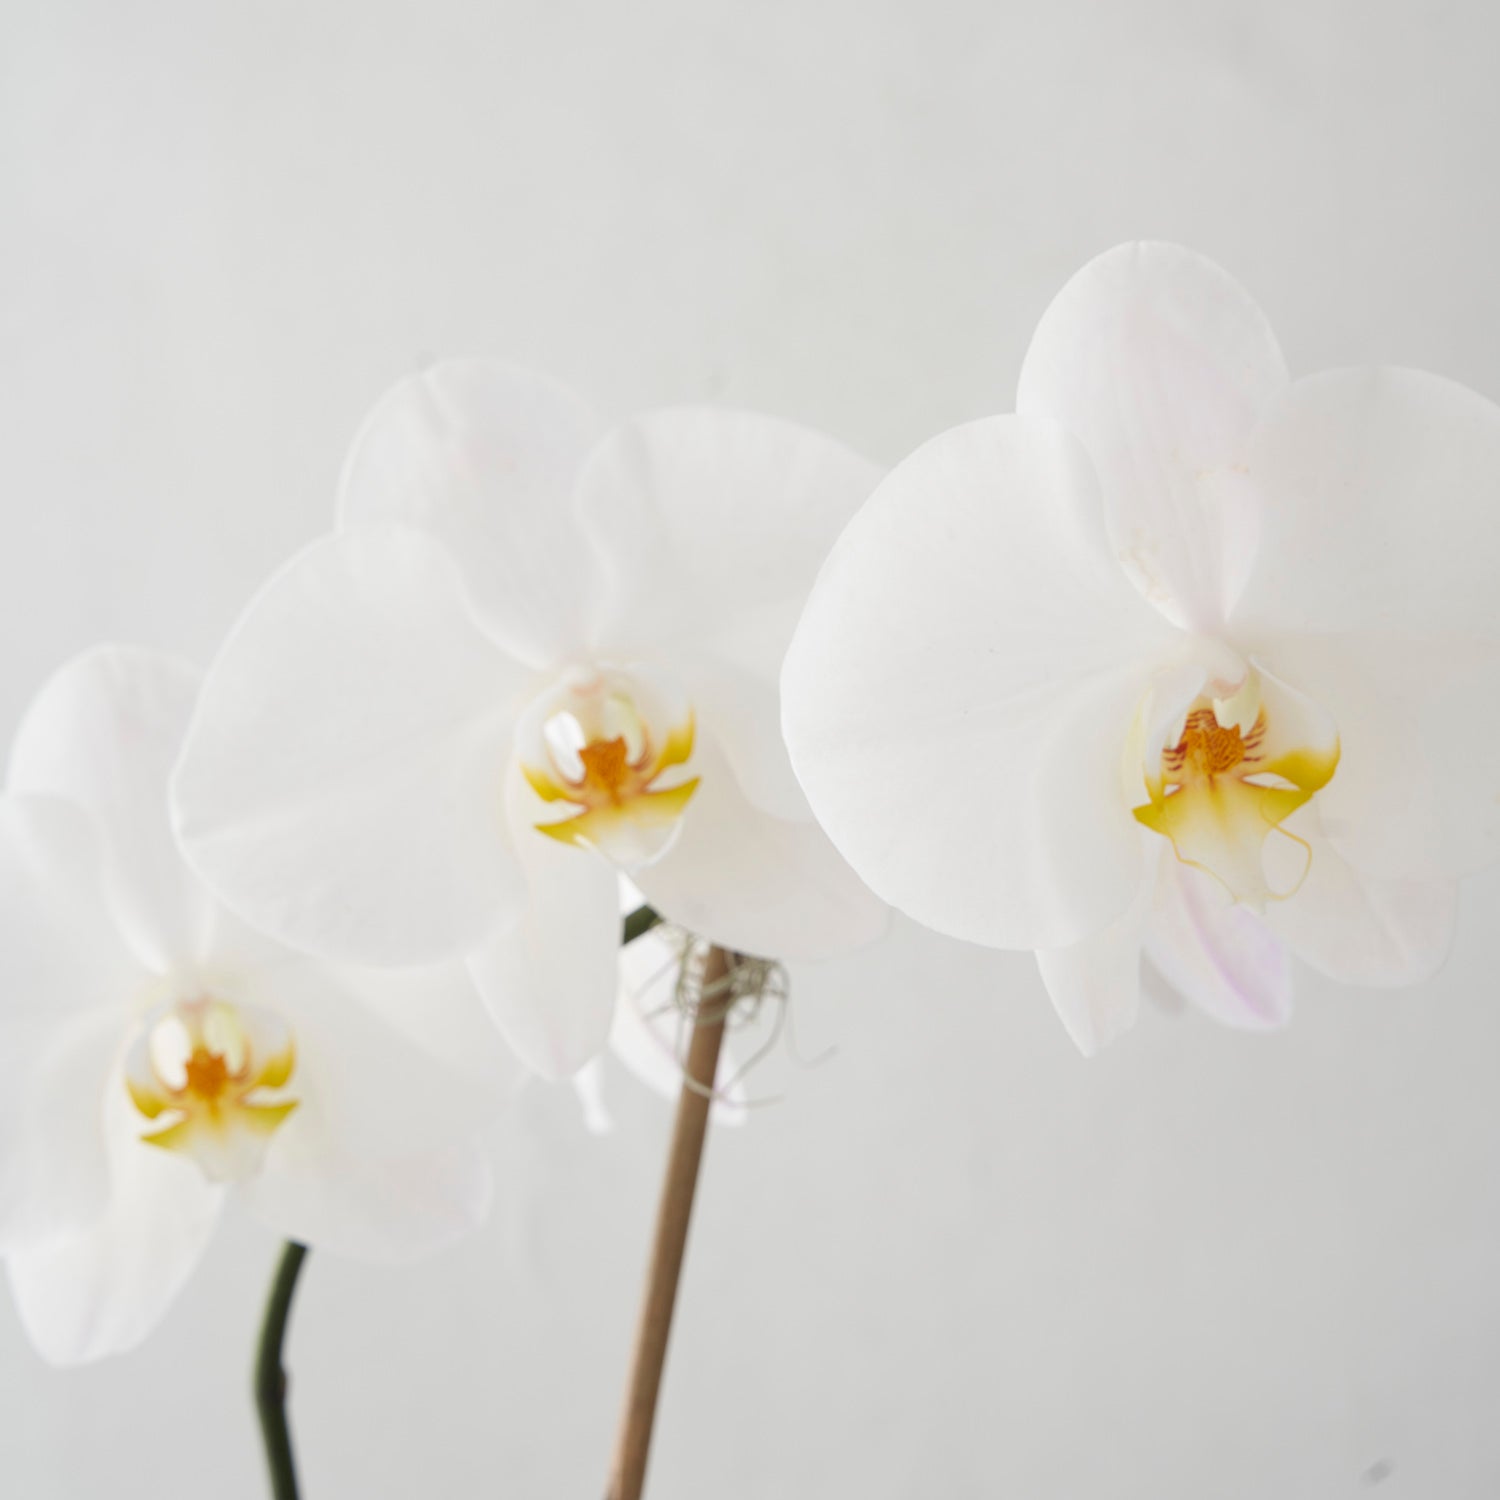 Closeup of three white phalaenopsis flowers on white background,